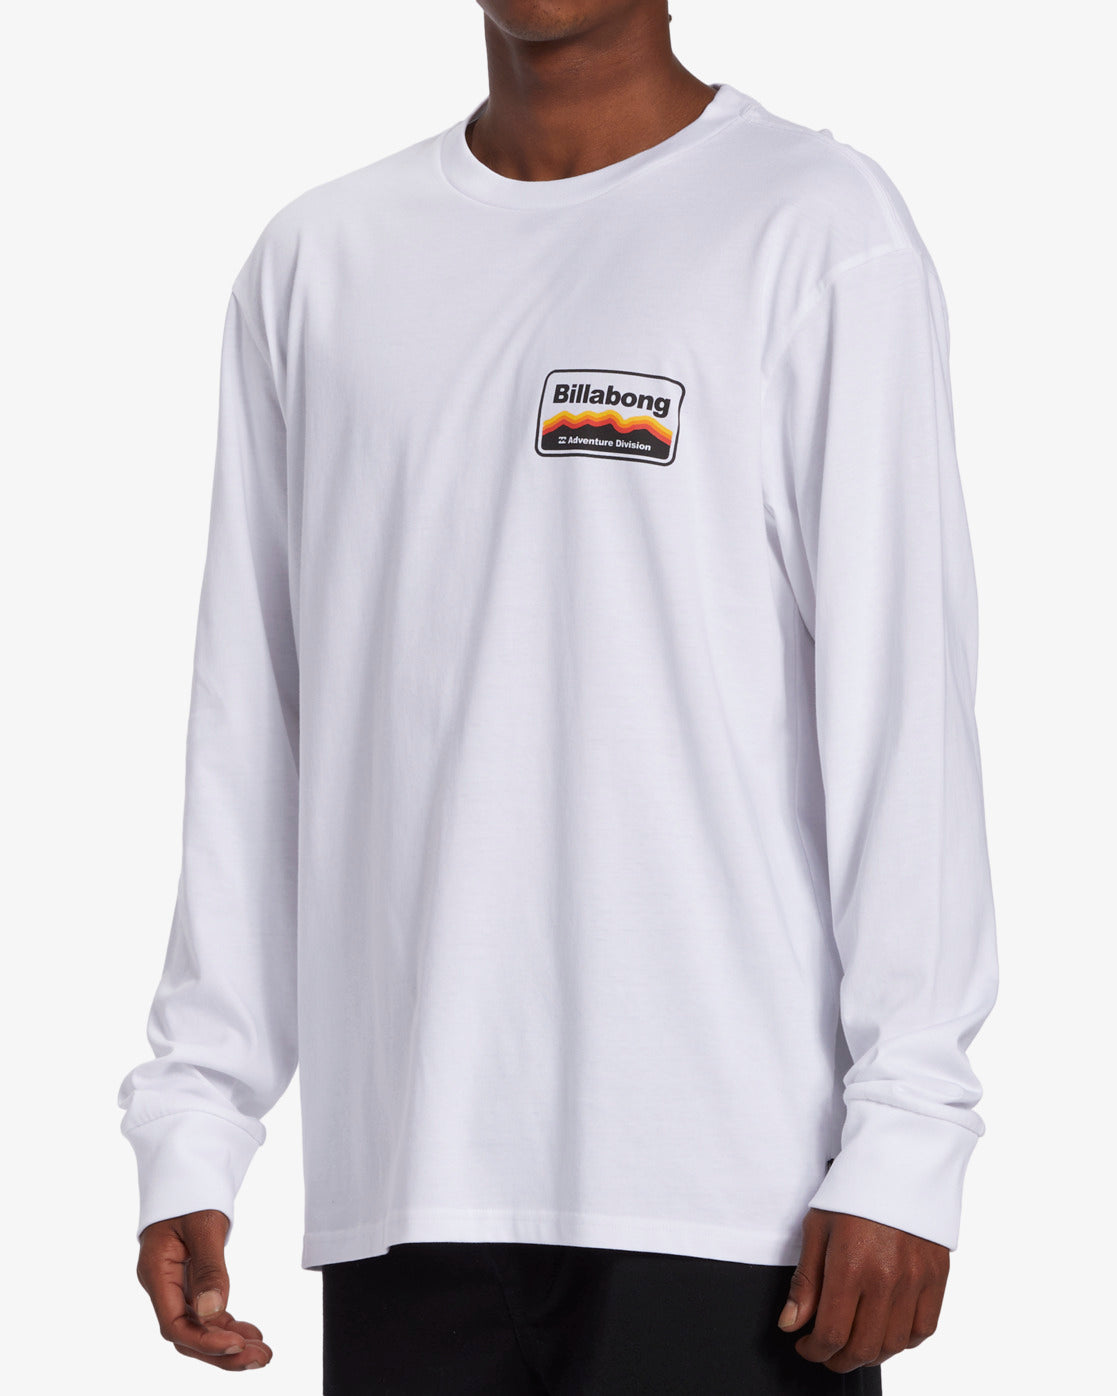 Range Long Sleeve T-Shirt - White